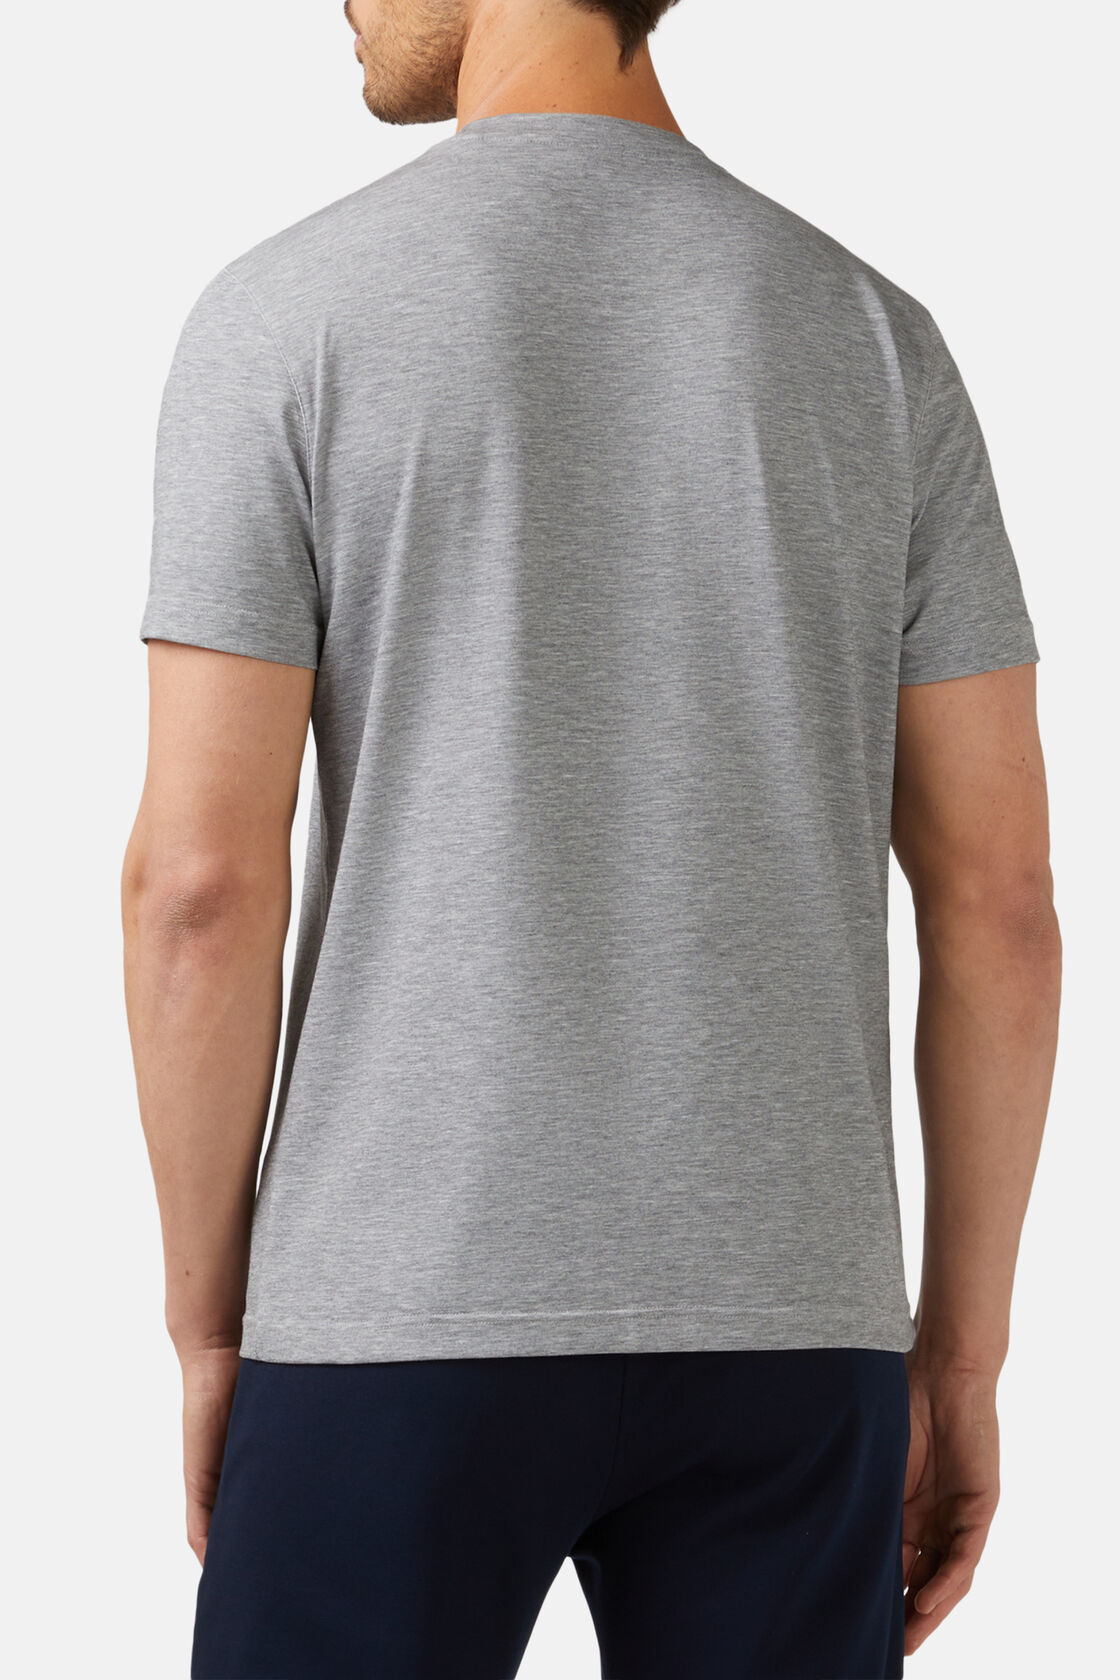 T-Shirt in Cotton, Nylon & Tencel, Grey, hi-res